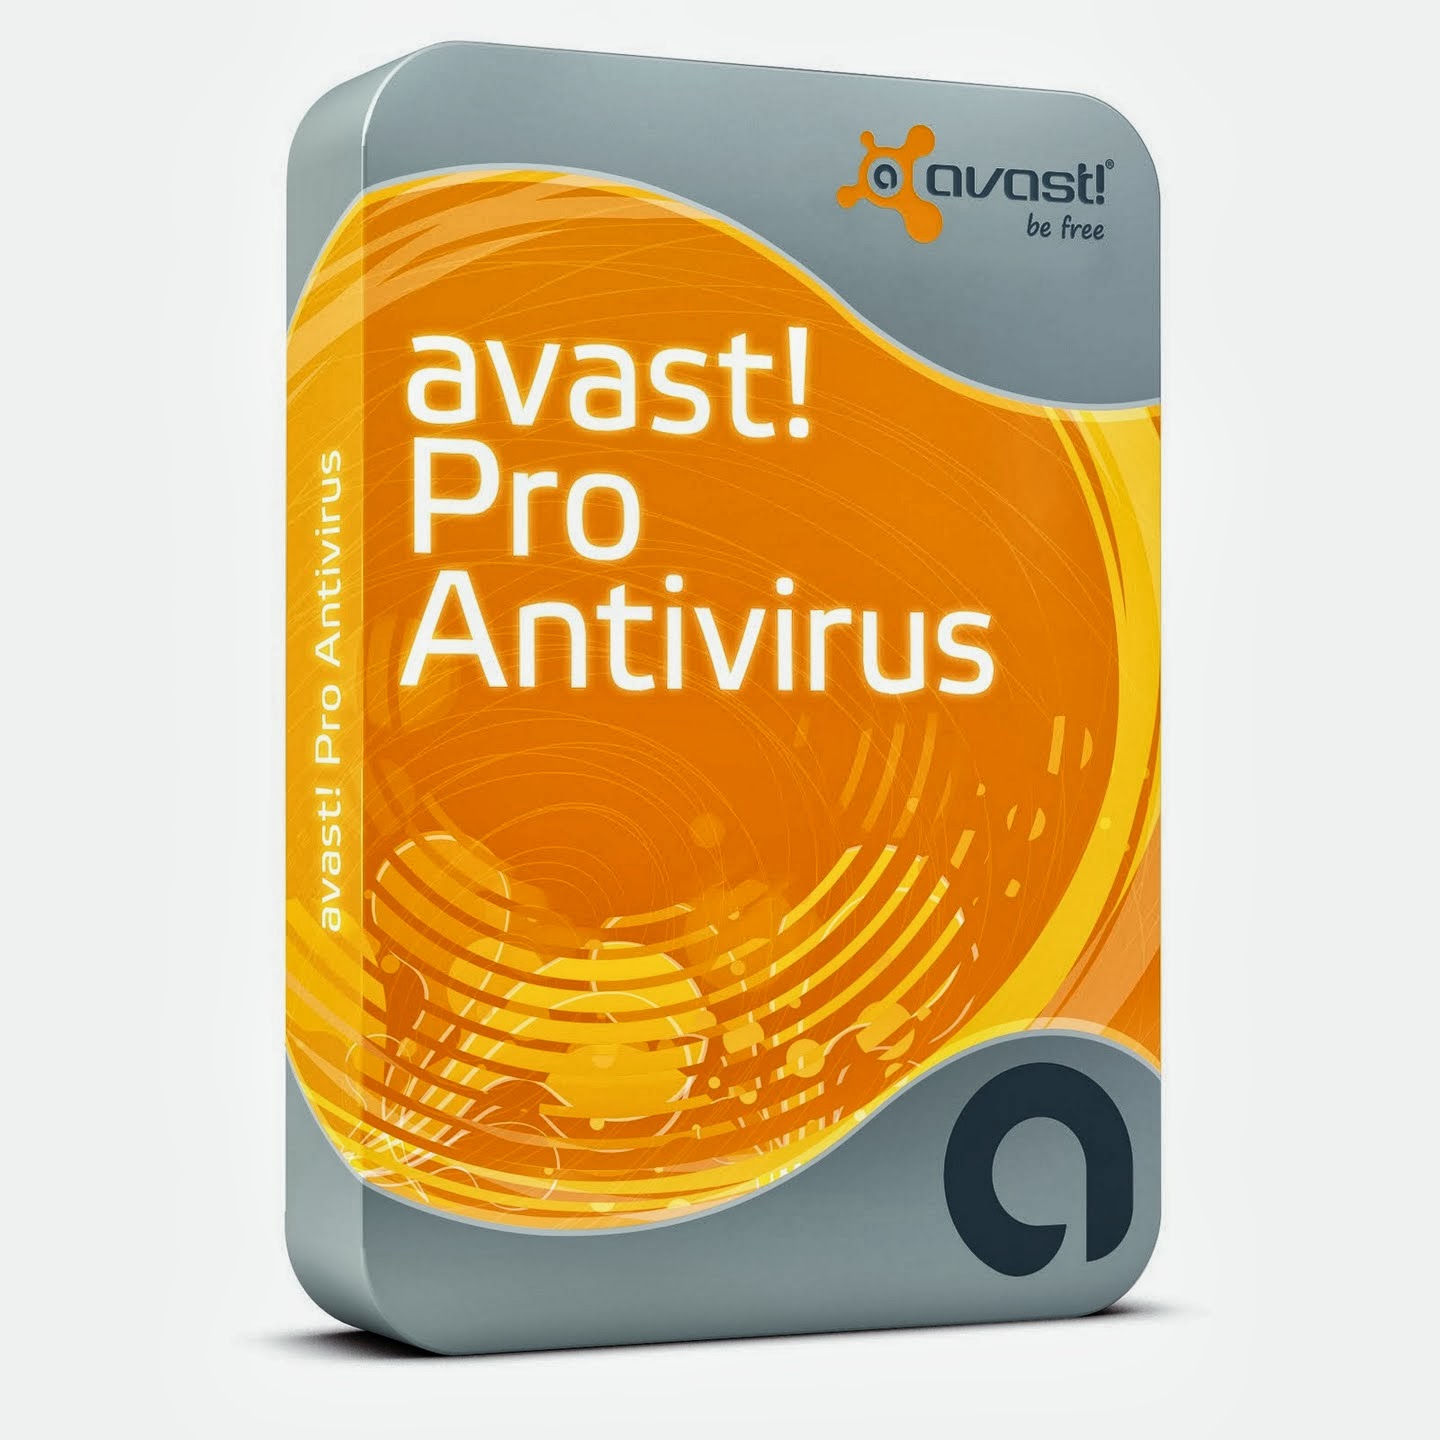 Descargar Antivirus Avast Gratis 2016 - Barabekyu